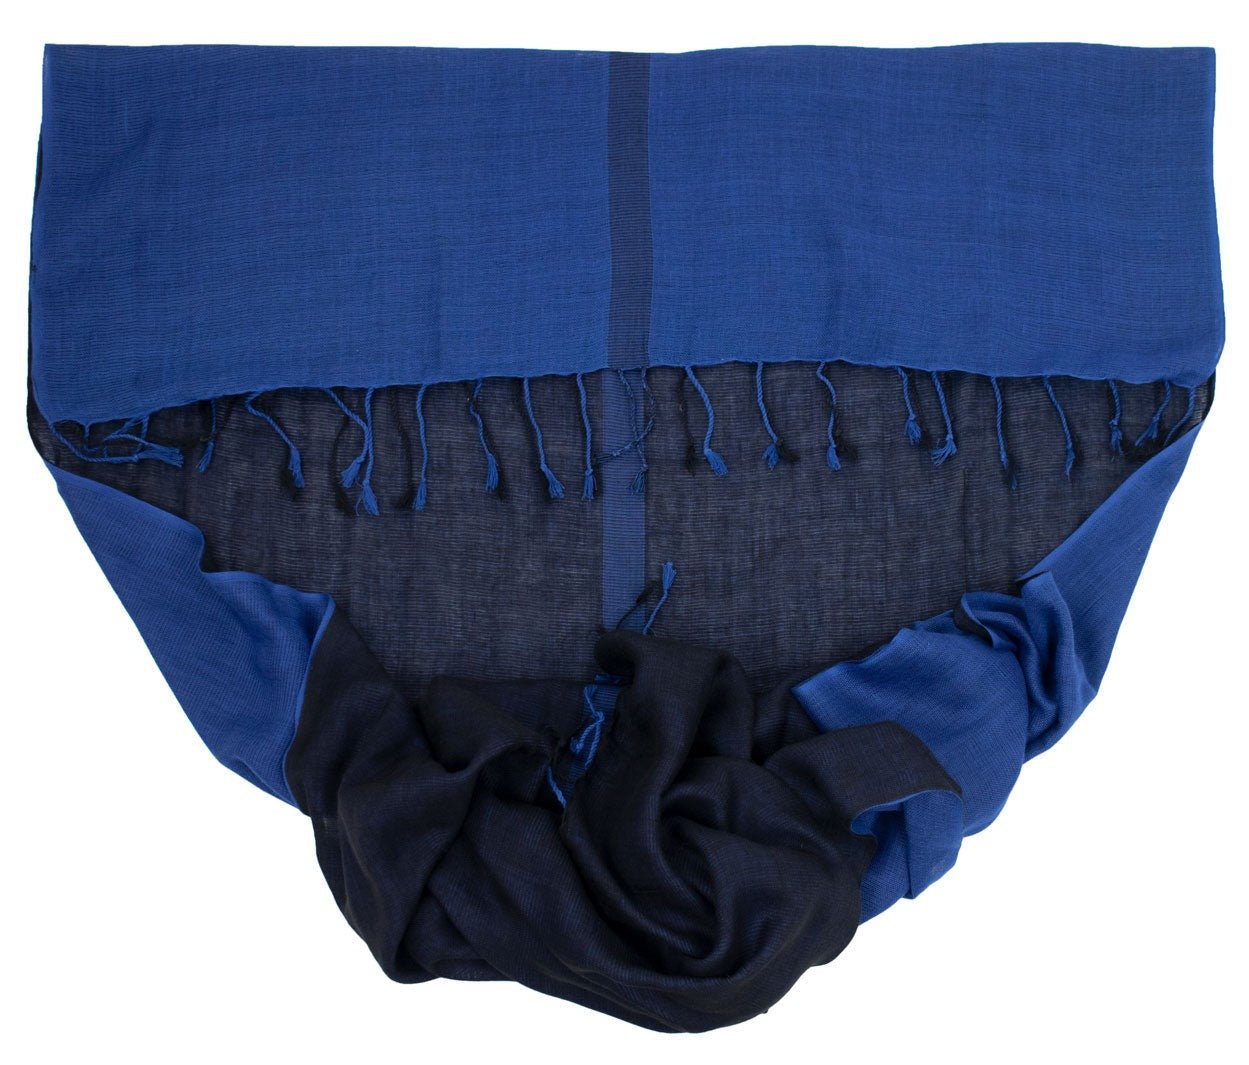 Viskose-Baumwolle Hijab -Sovran Black and Blue